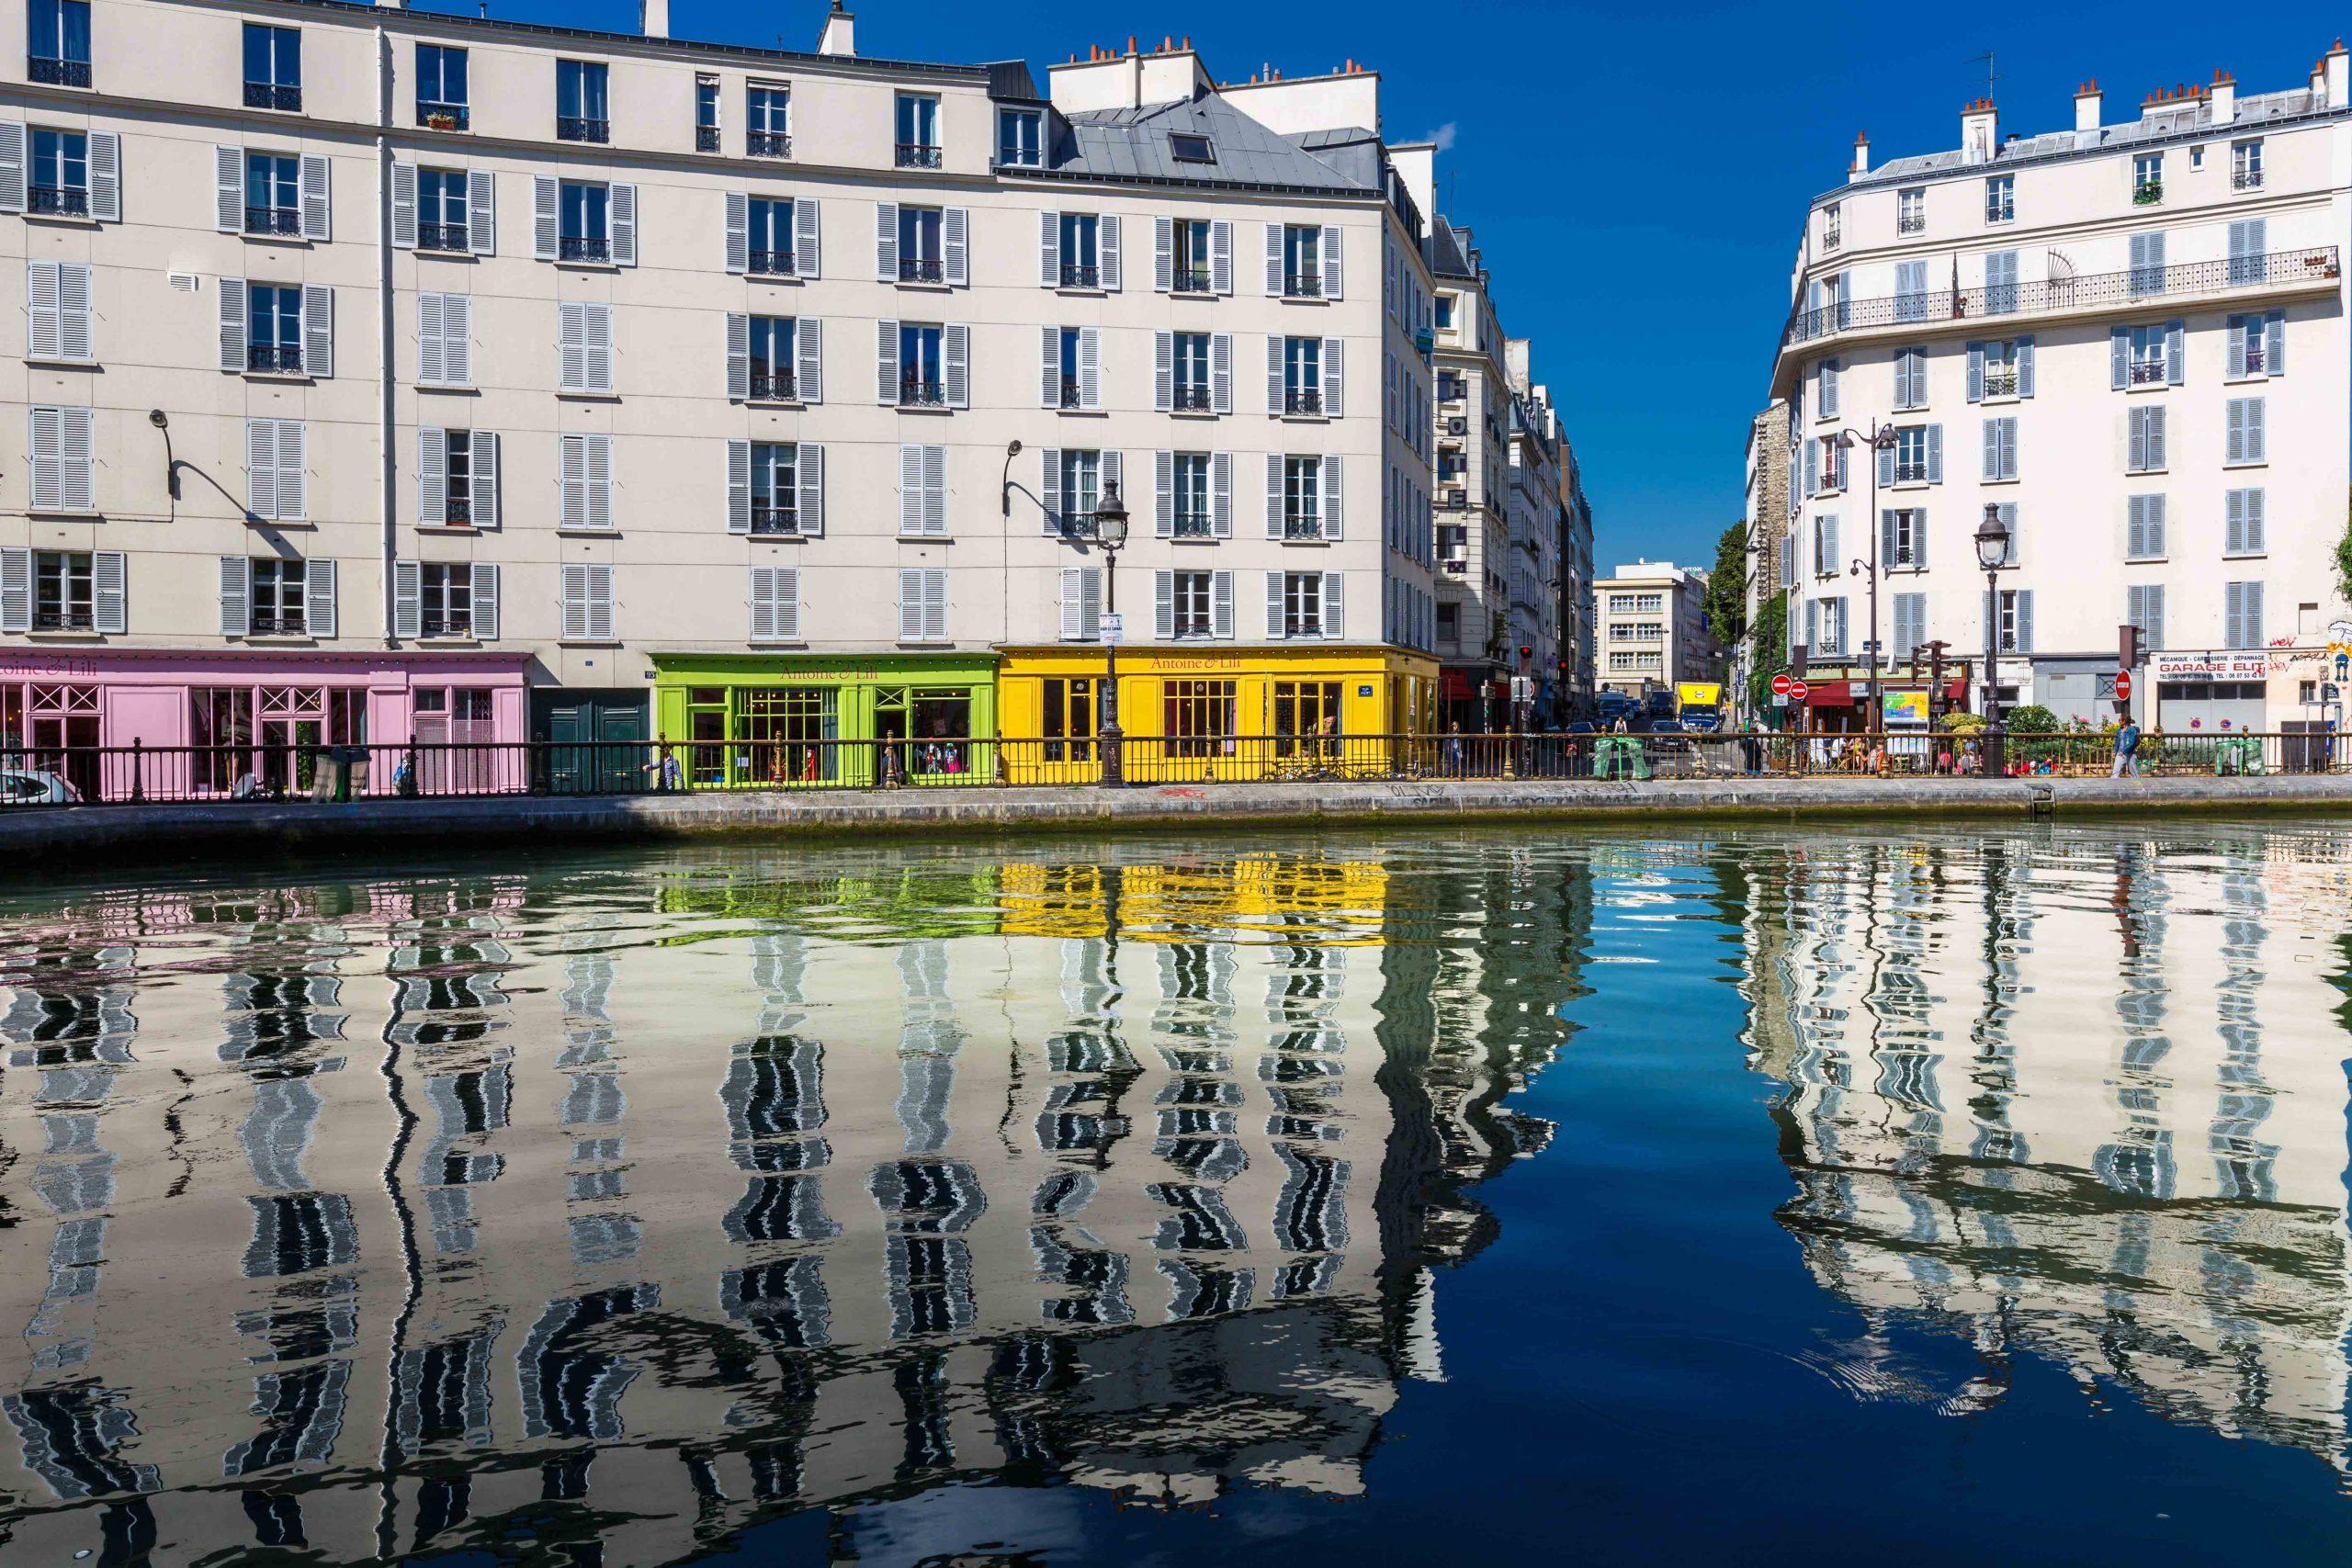 Guide to Canal Saint-Martin, Paris | Paris Travel Guide - KAYAK